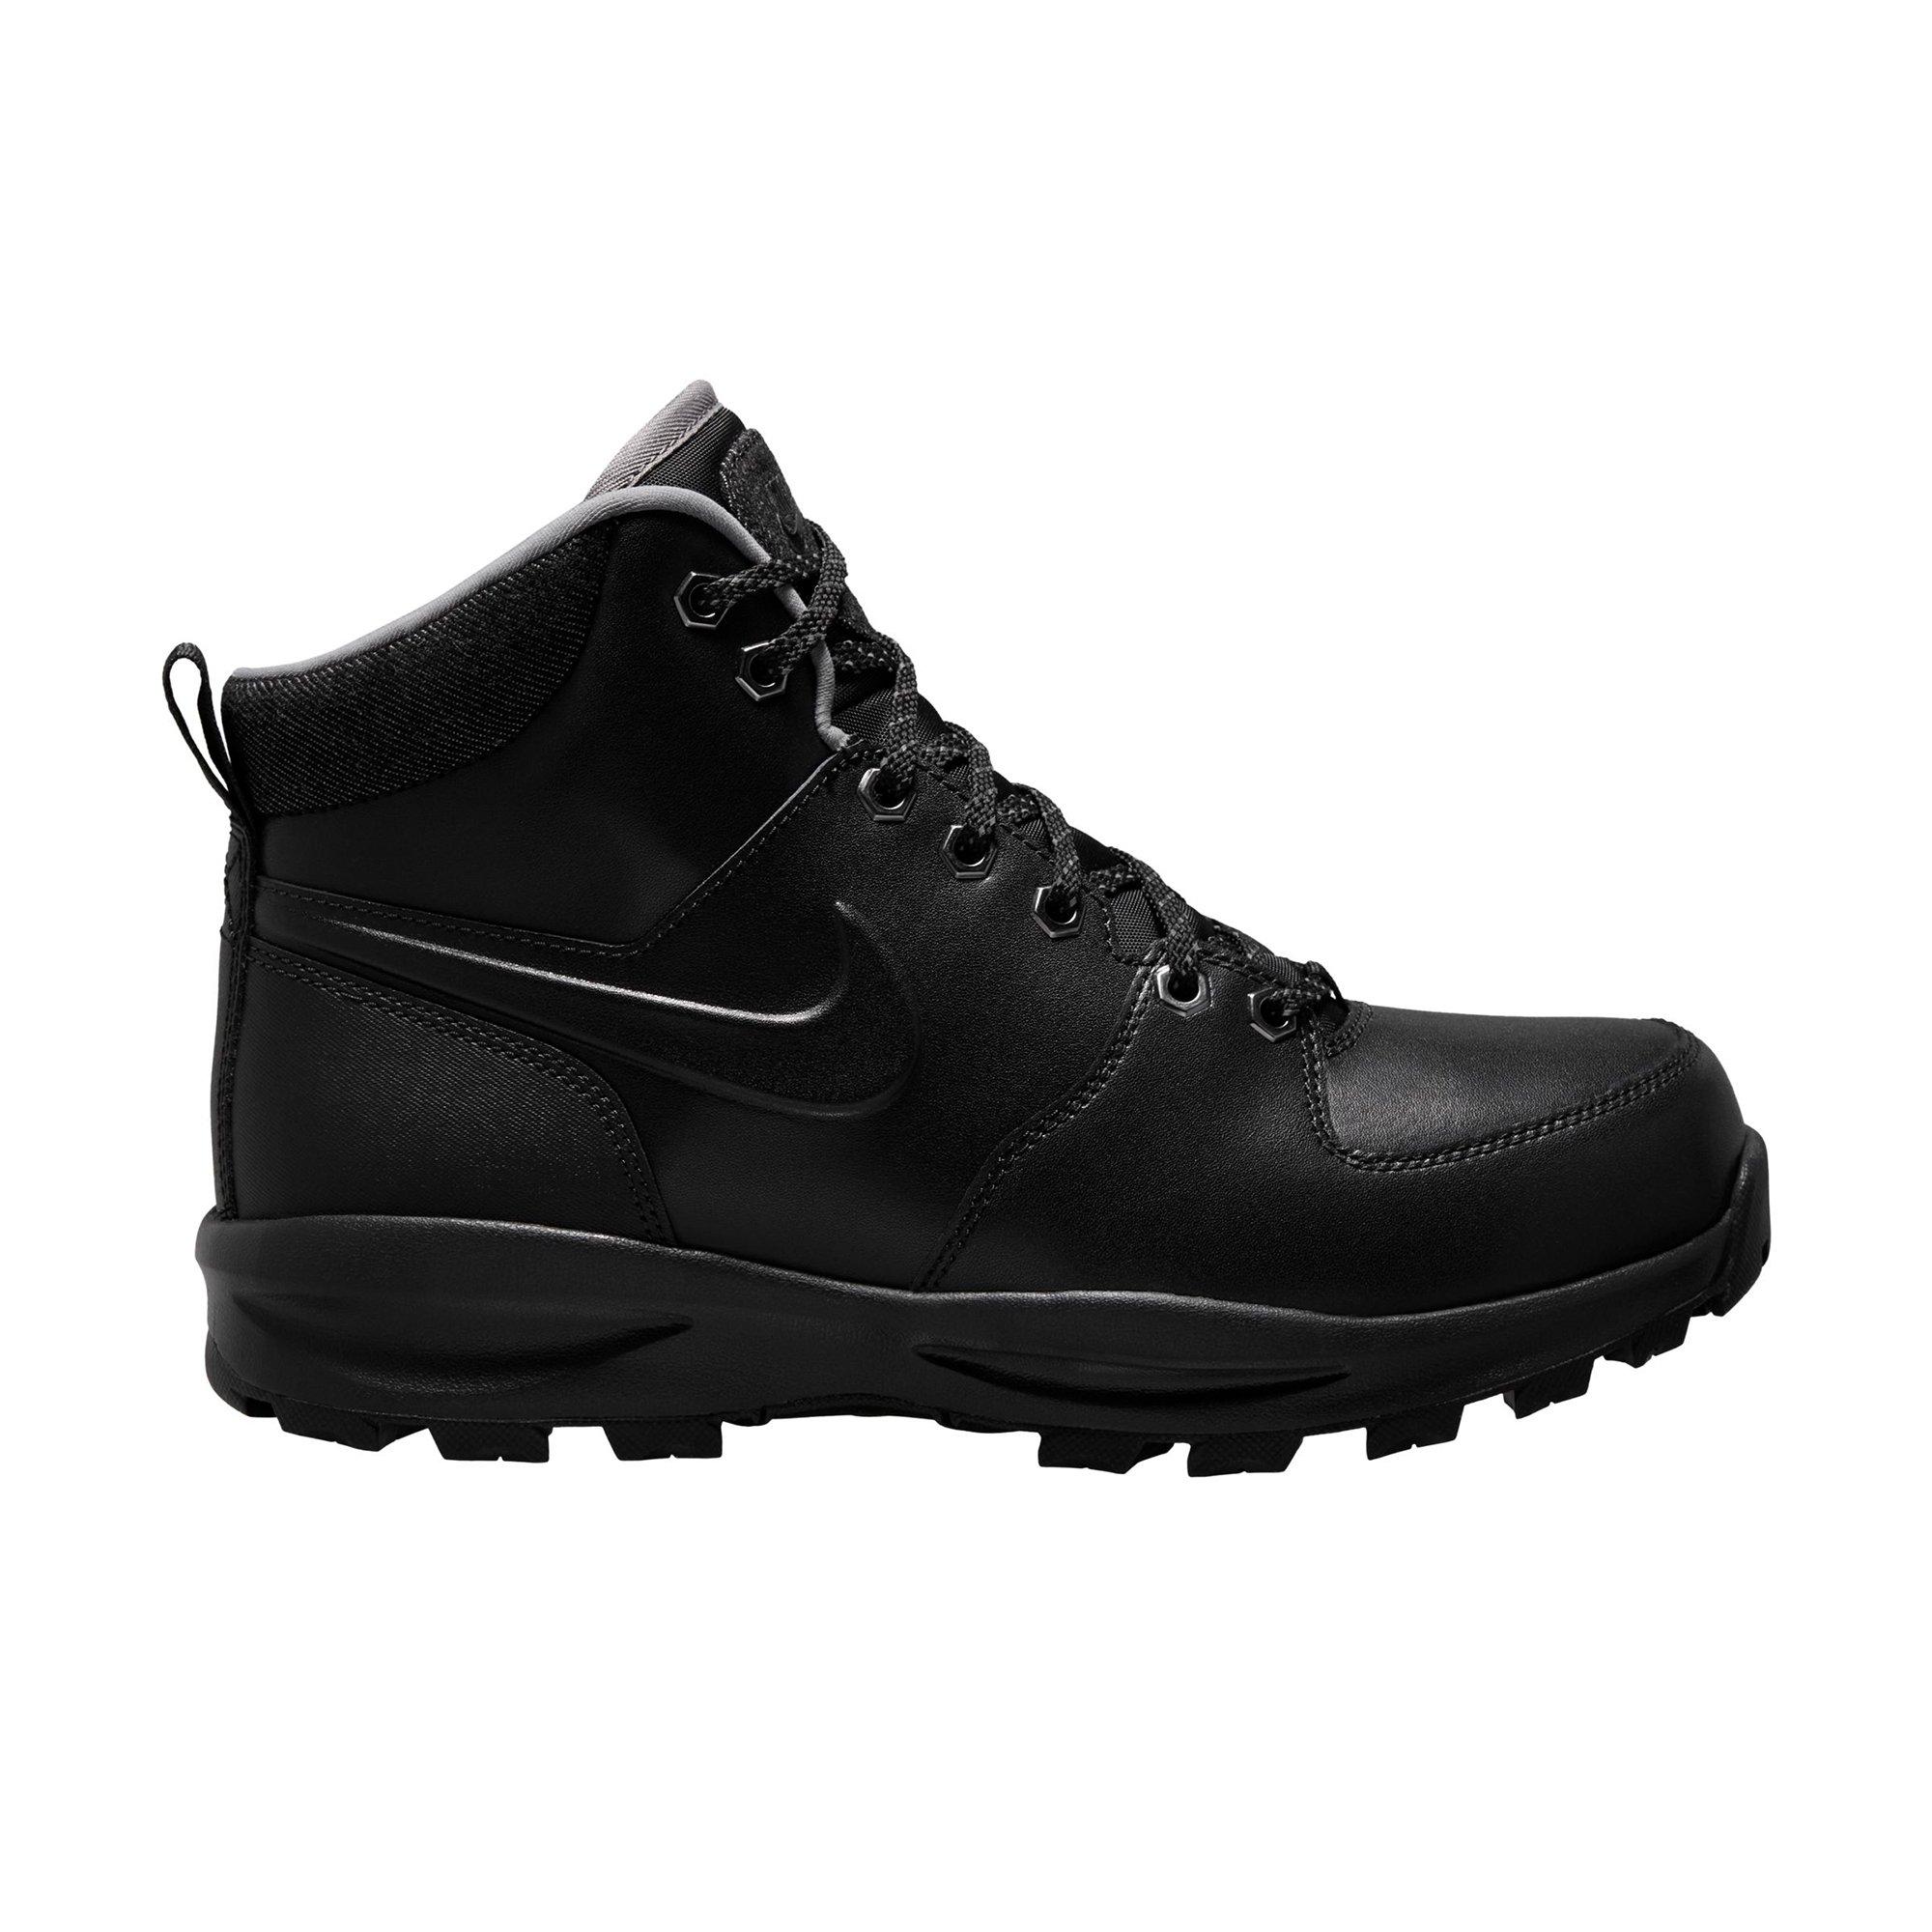 Manoa Leather "Black/Gunsmoke" Boot